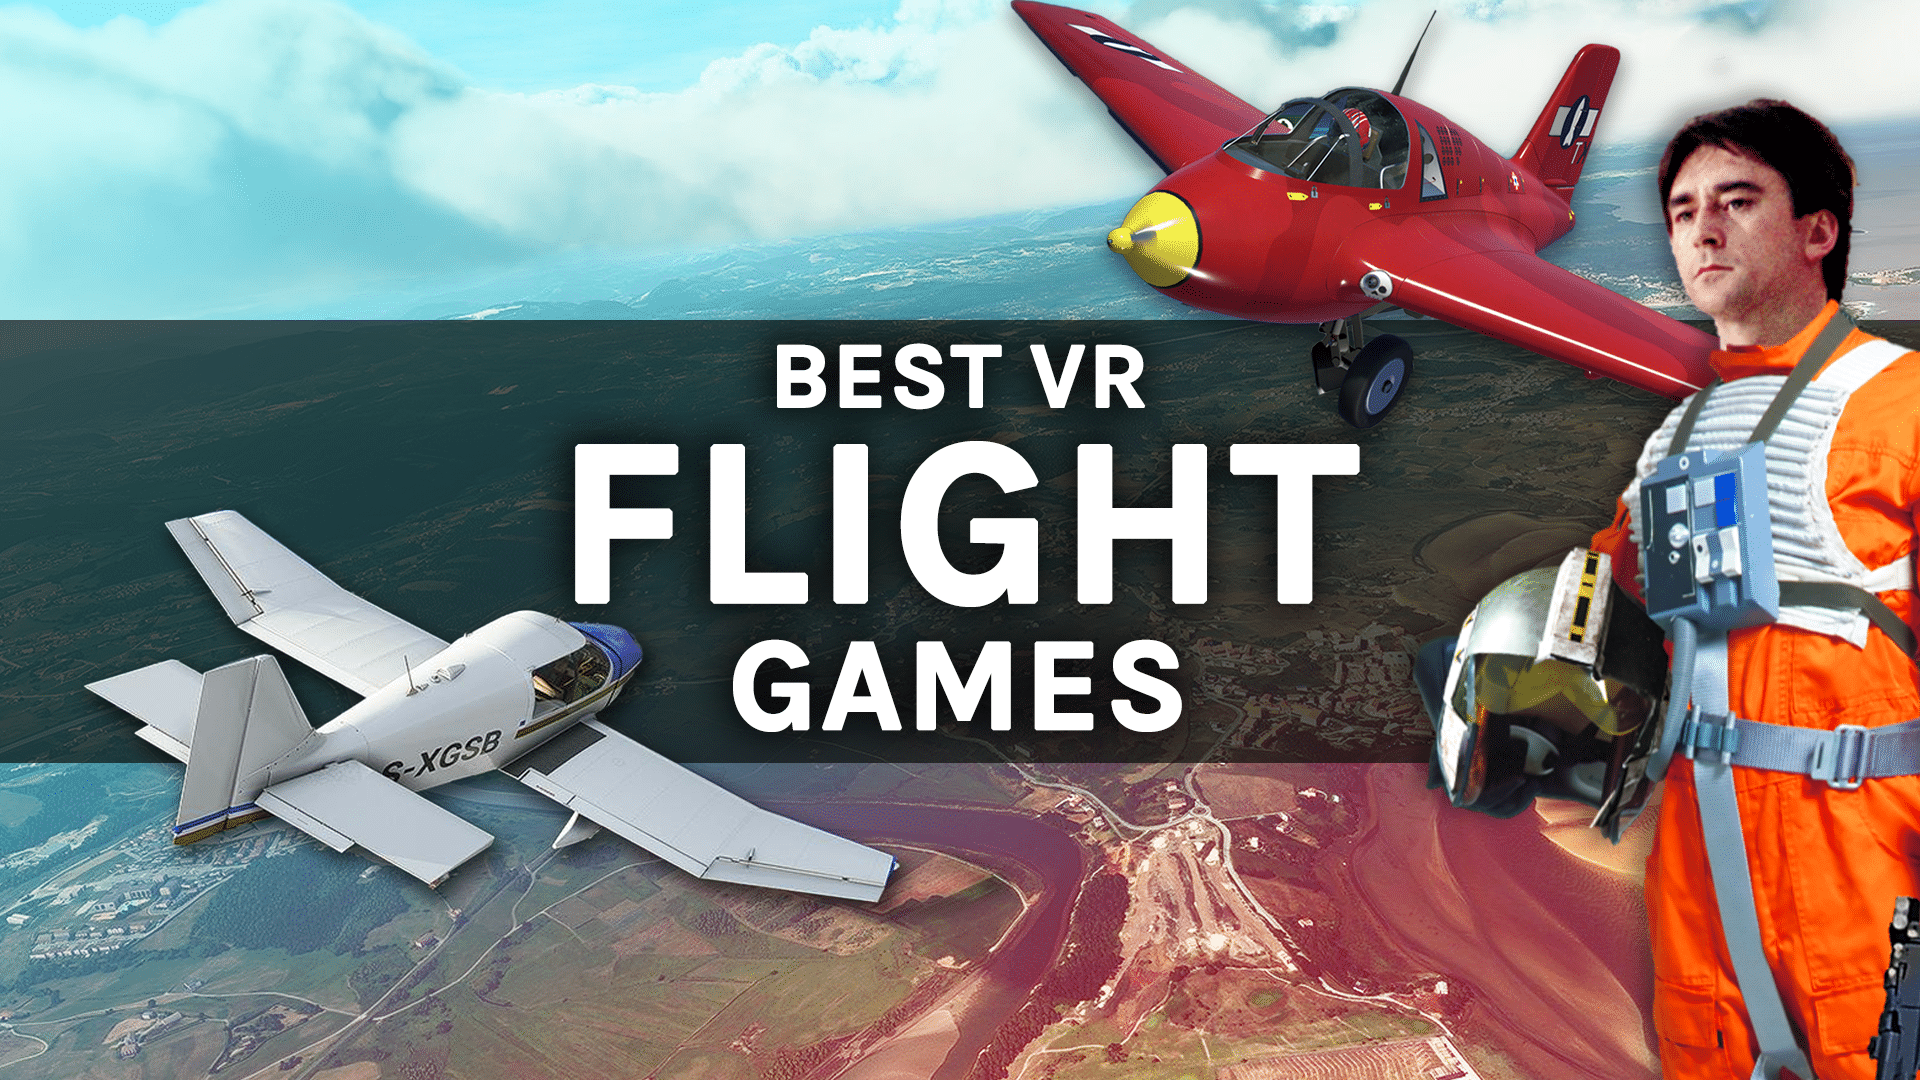 Airplane Race Simulator - 2 Player Game